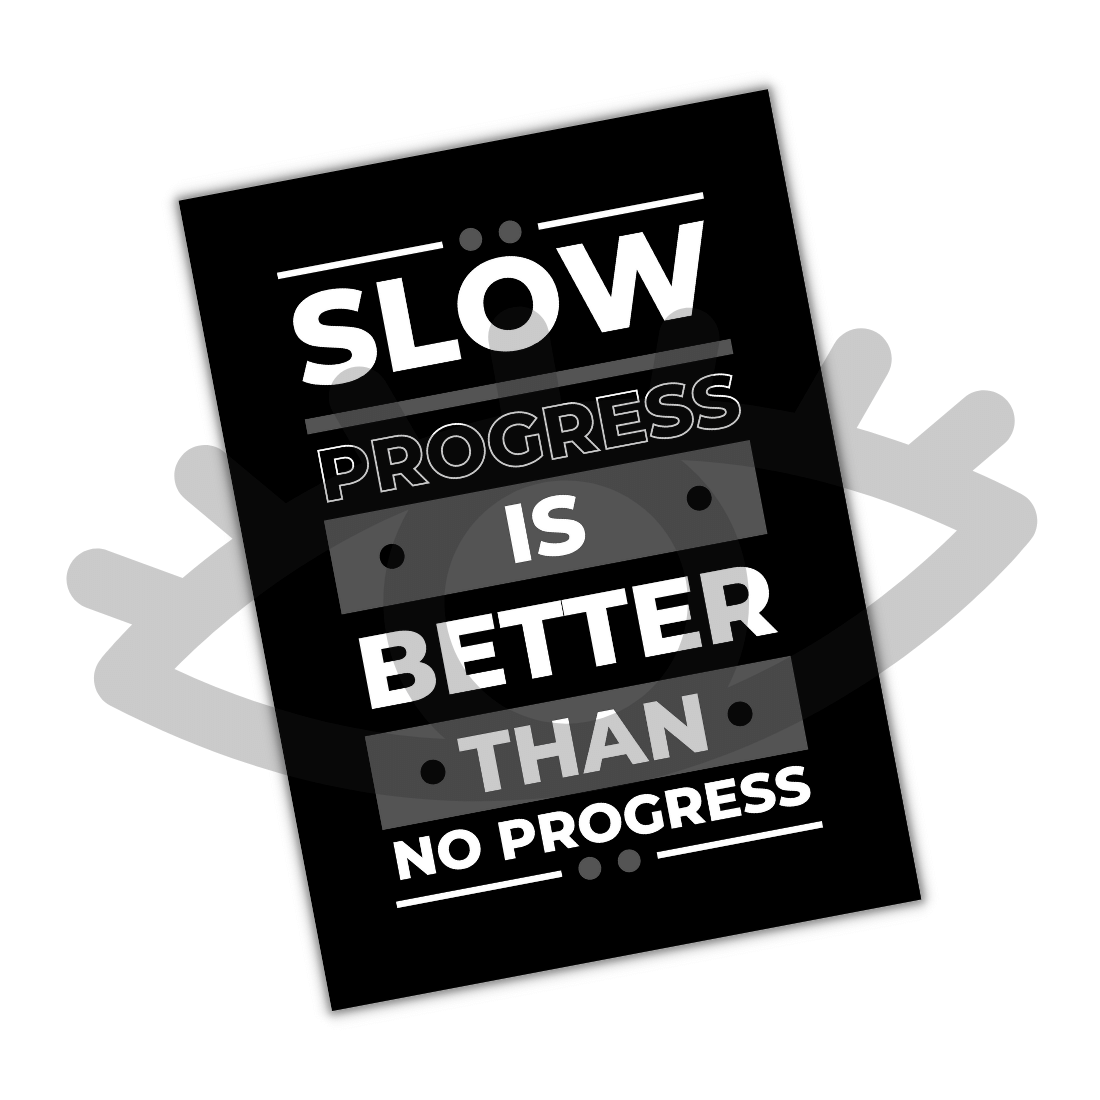 Slow Progress Is Better Than No Progress - main image preview.